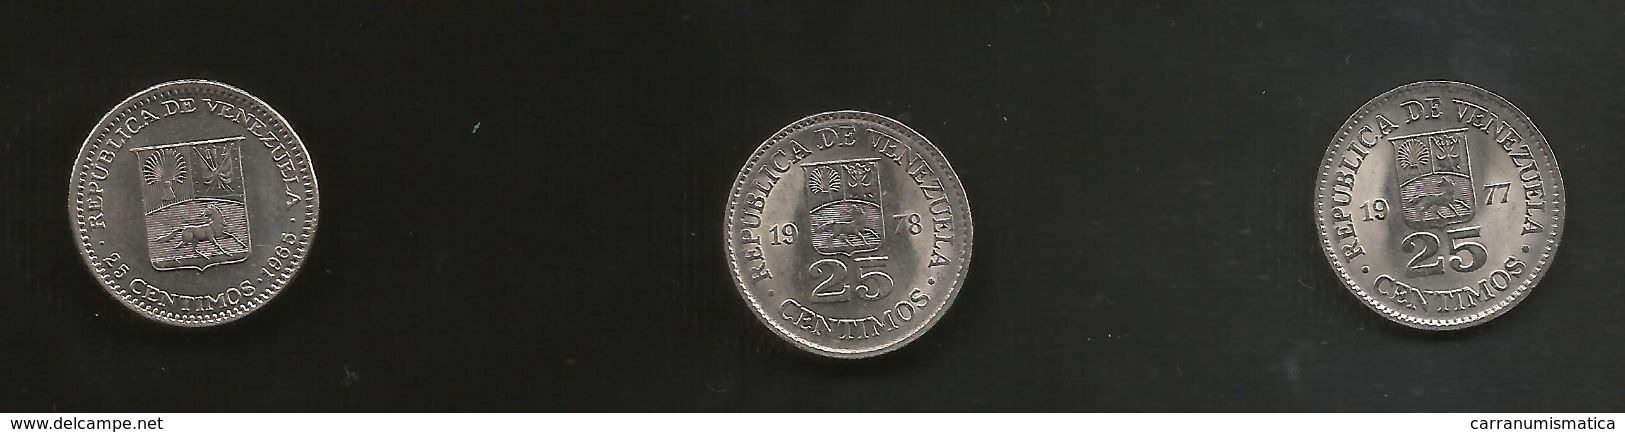 VENEZUELA - 25 CENTIMOS (1965 / 1977 / 1978) Lot Of 3 Different Coins - Venezuela